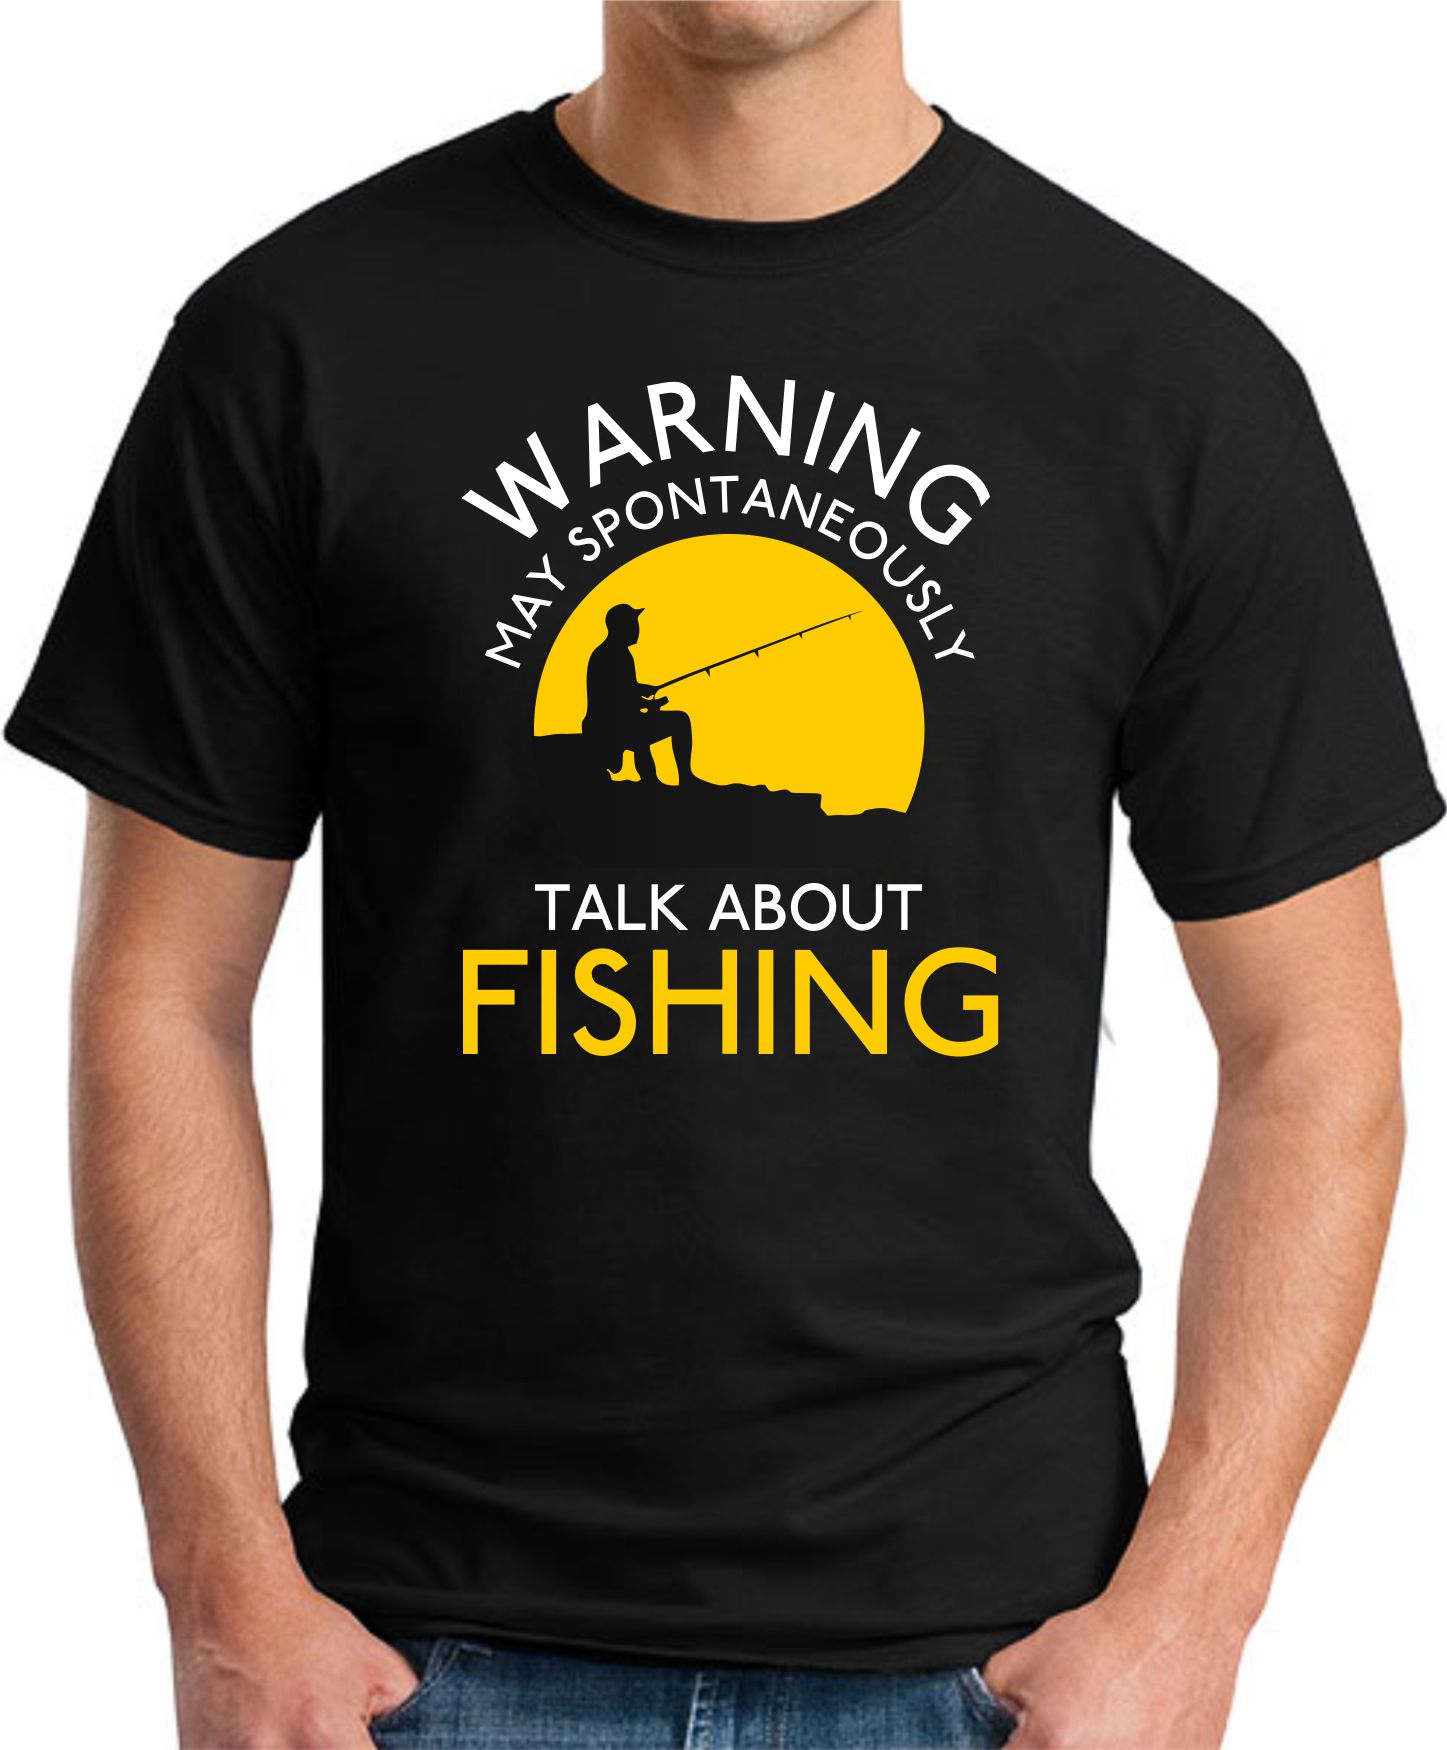 WARNING MAY SPONTANEOUSLY TALK ABOUT FISHING black